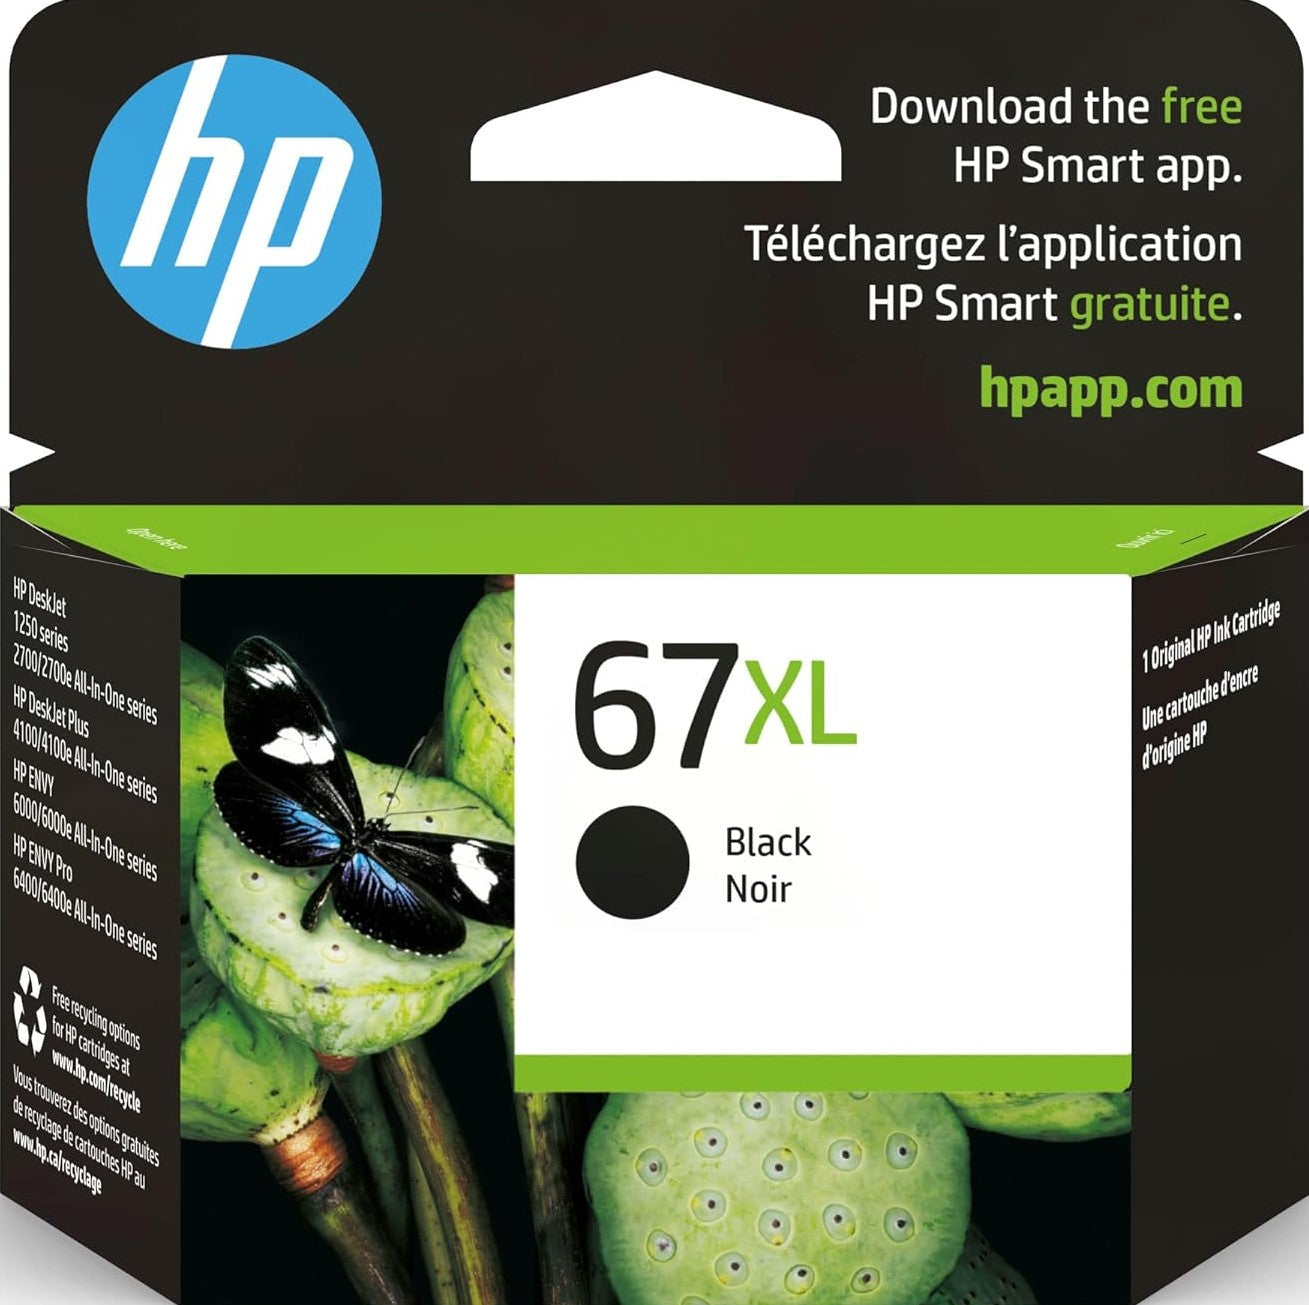 67XL HP High Capacity Black Ink Cartridge